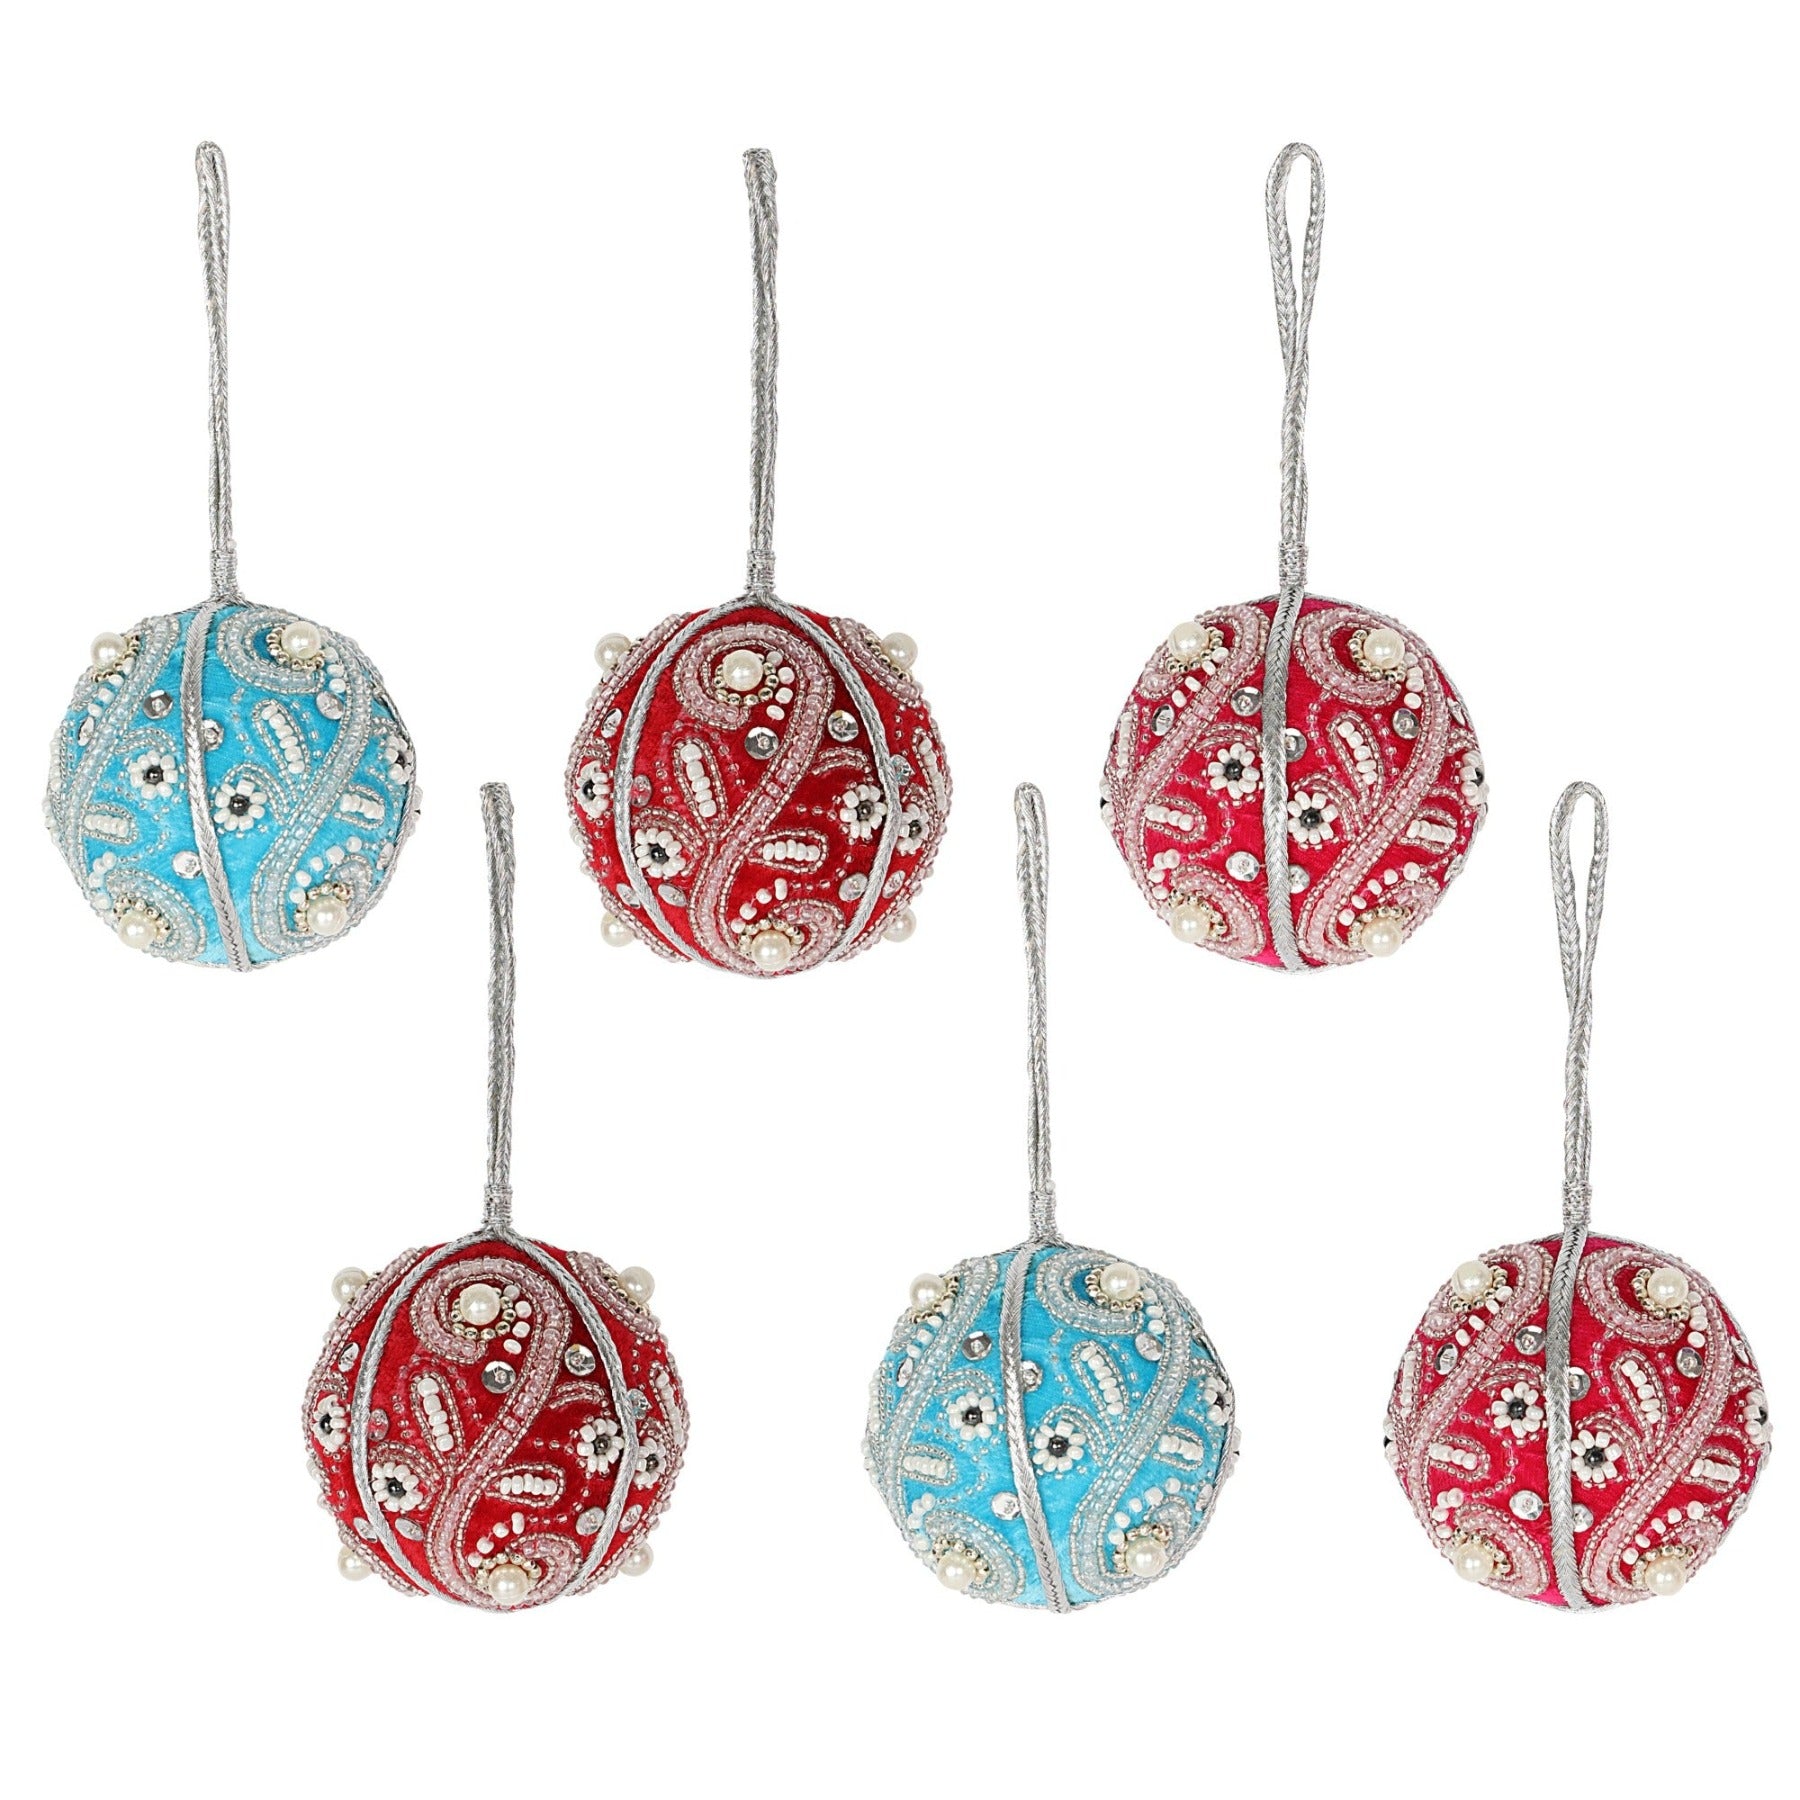 Decorative Pearls christmas balls ornaments set 0f 6 - Multicolor christmas balls tree ornaments for holiday decor (1SET=6PCS)